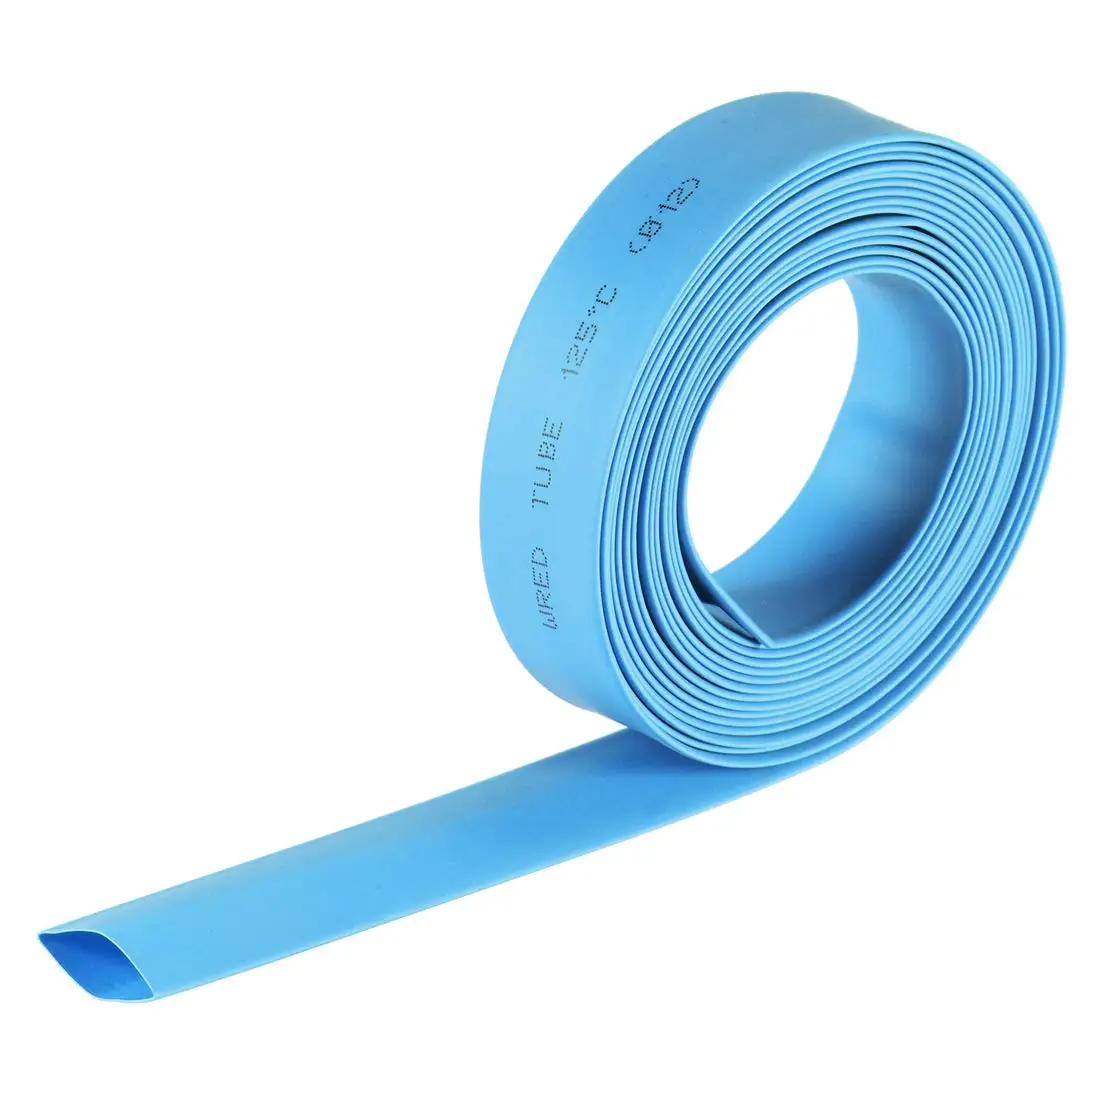 

Keszoox Heat Shrink Tubing, 1/2"(12mm) Dia 20mm Flat Width 2:1 Ratio Shrinkable Tube Cable Sleeve 10ft - Blue